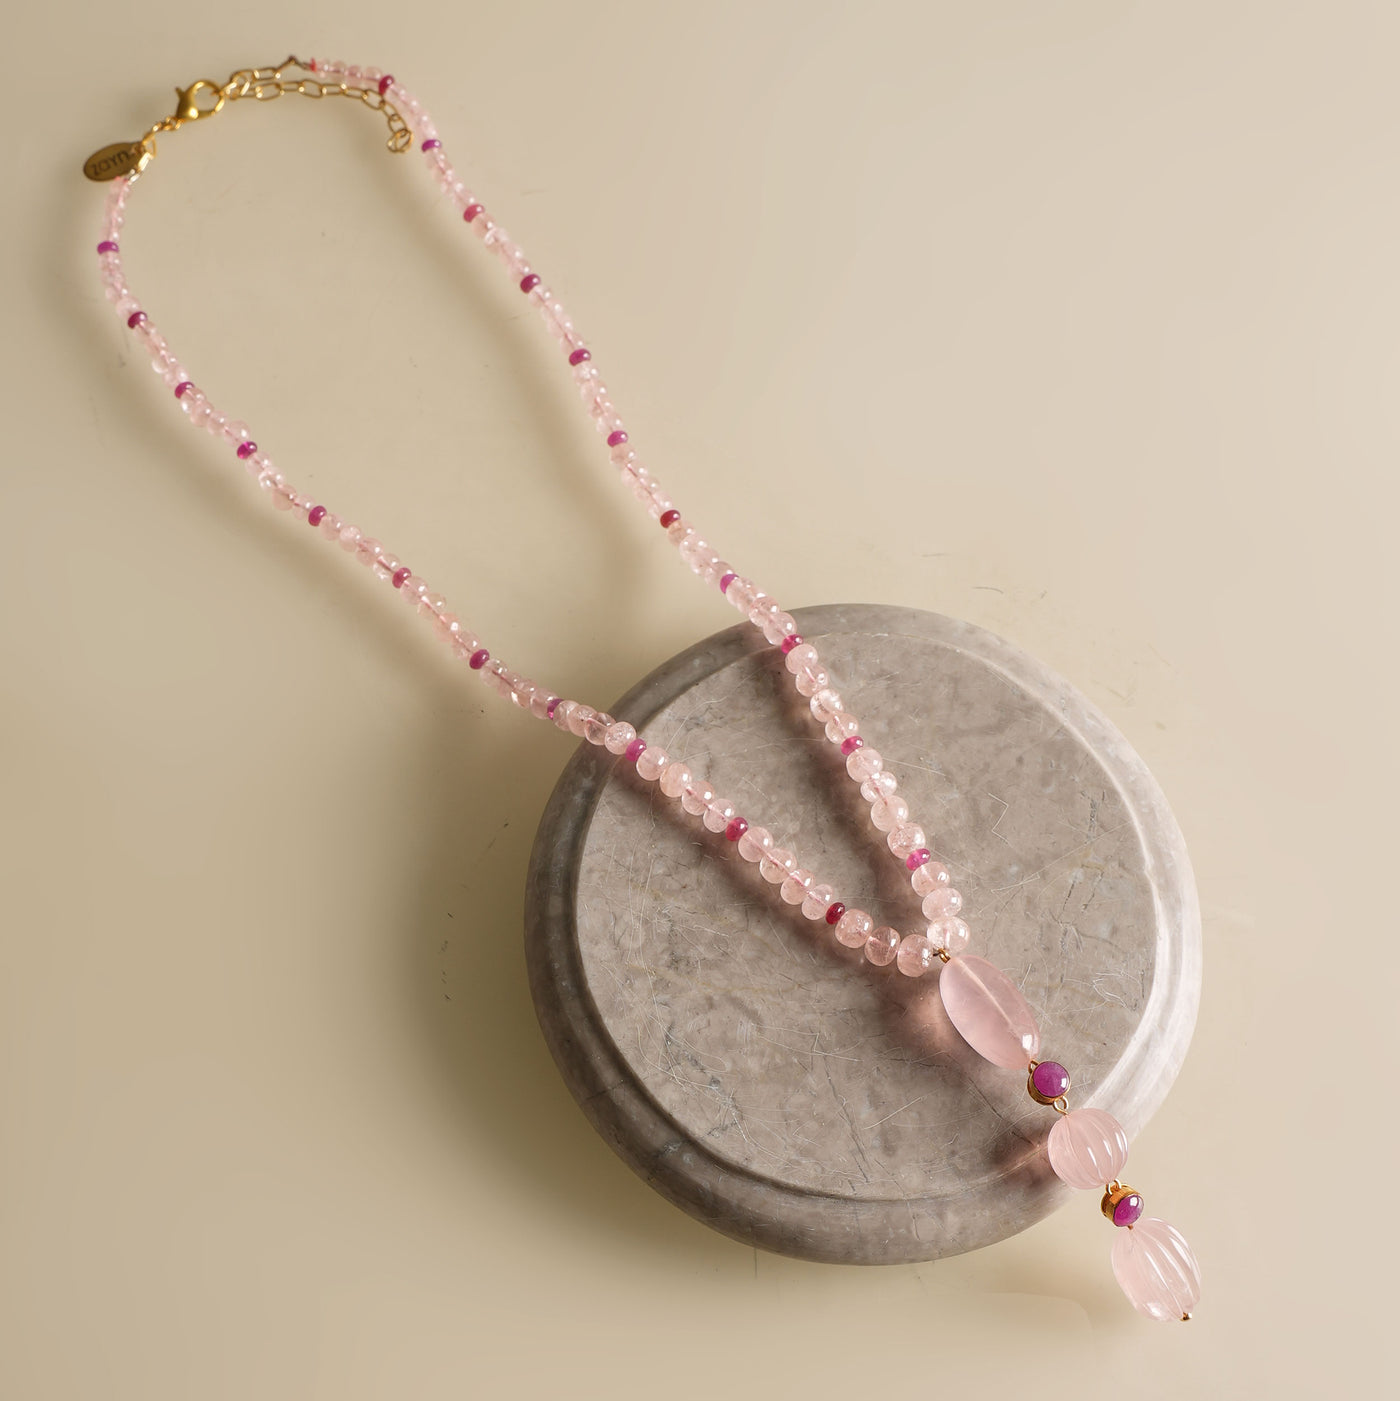 ZAYN BY SUNENA rose quartz pendant